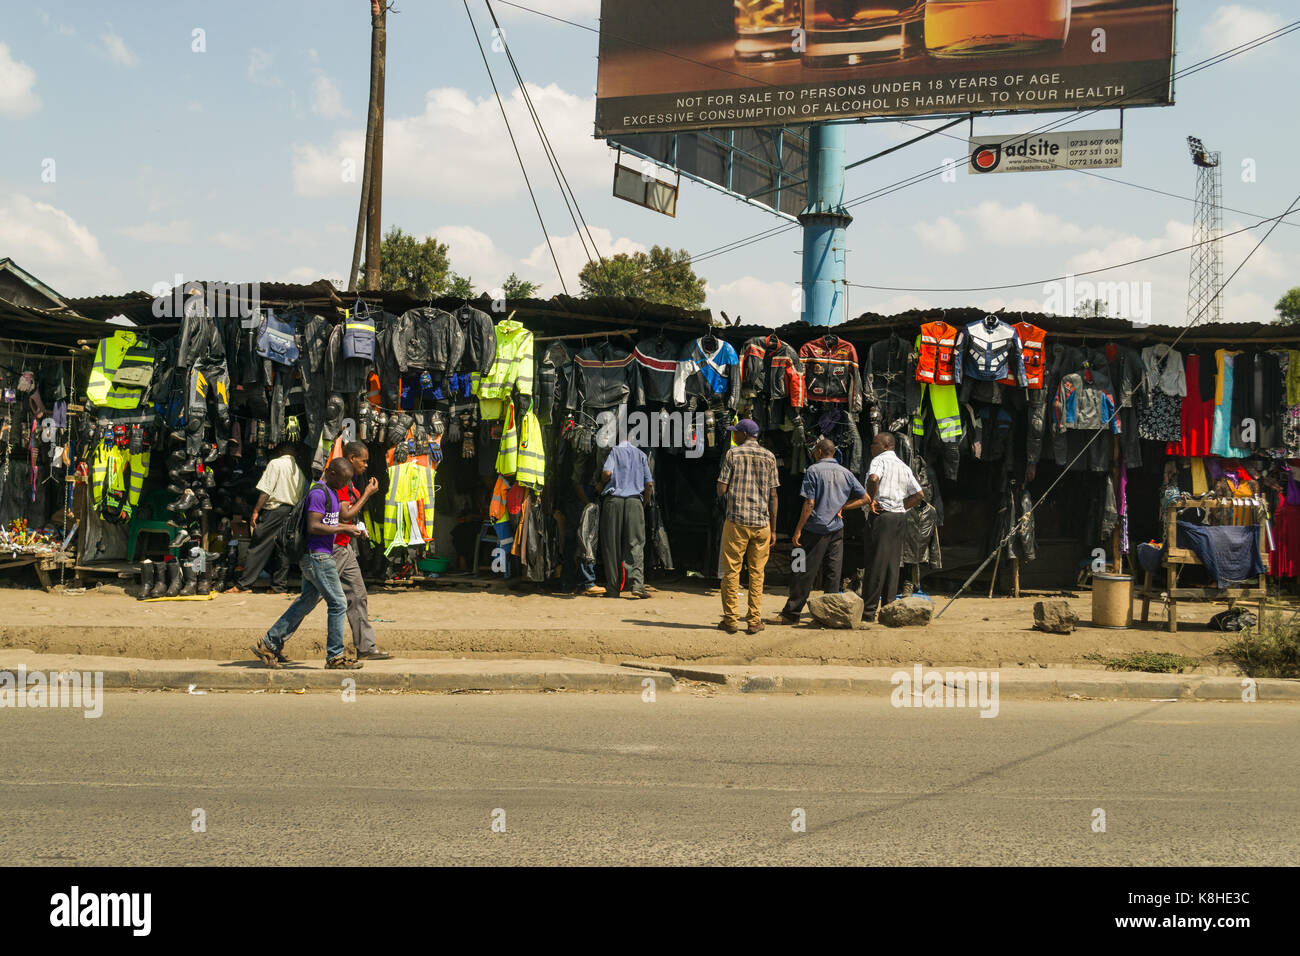 Various roadside stalls selling motorbike and bicycle clothing with people looking, Nairobi, Kenya Stock Photo